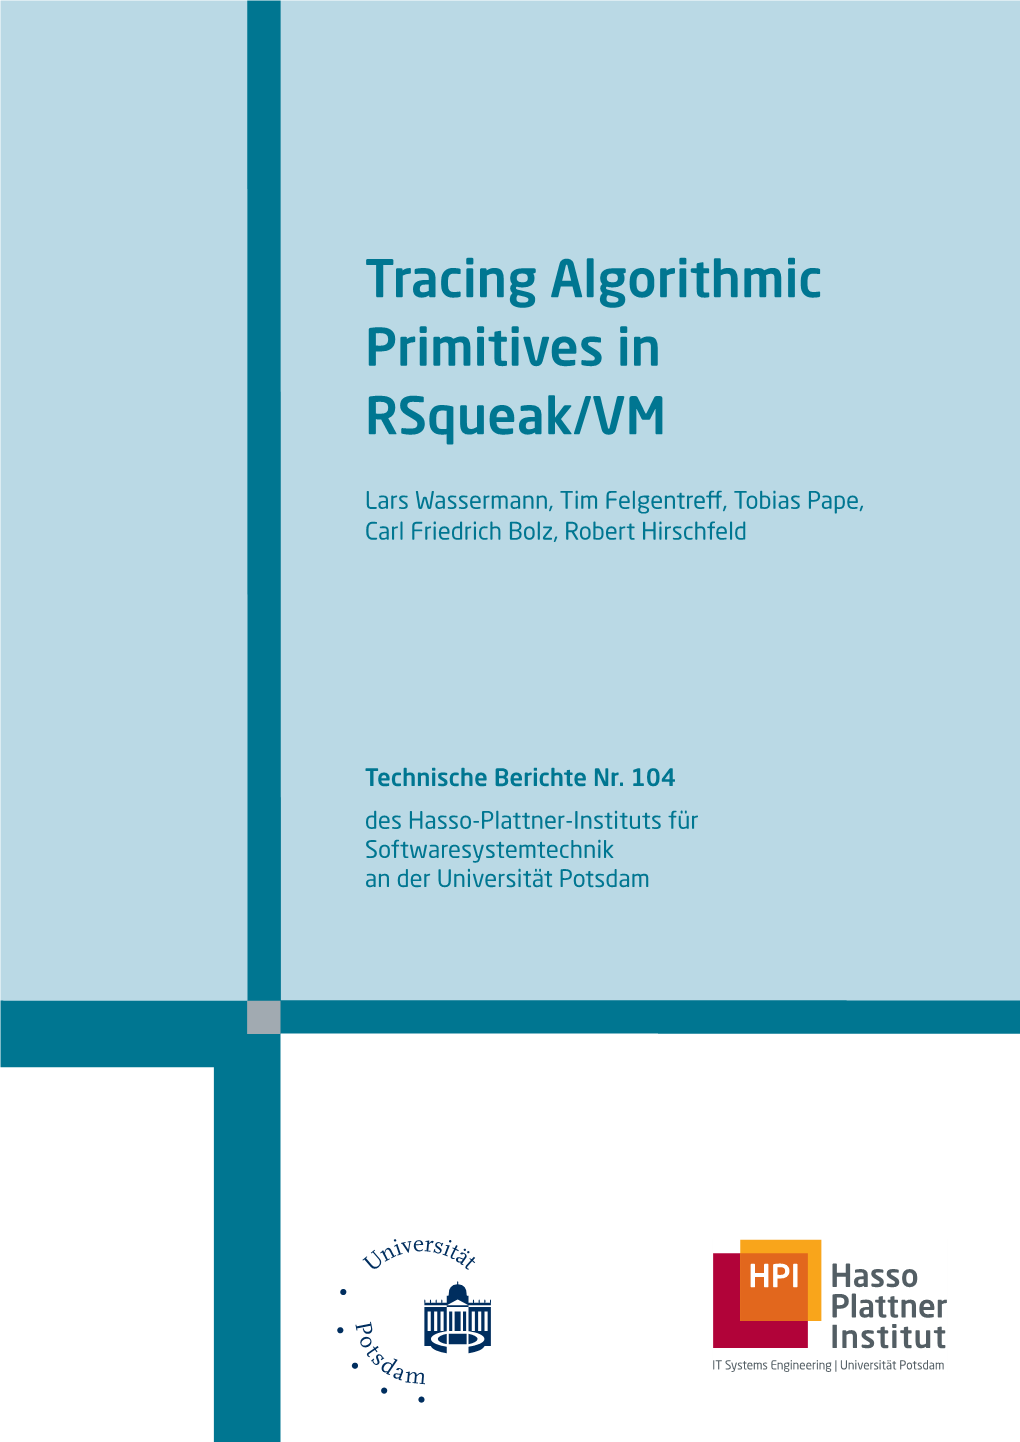 Tracing Algorithmic Primitives in Rsqueak/VM